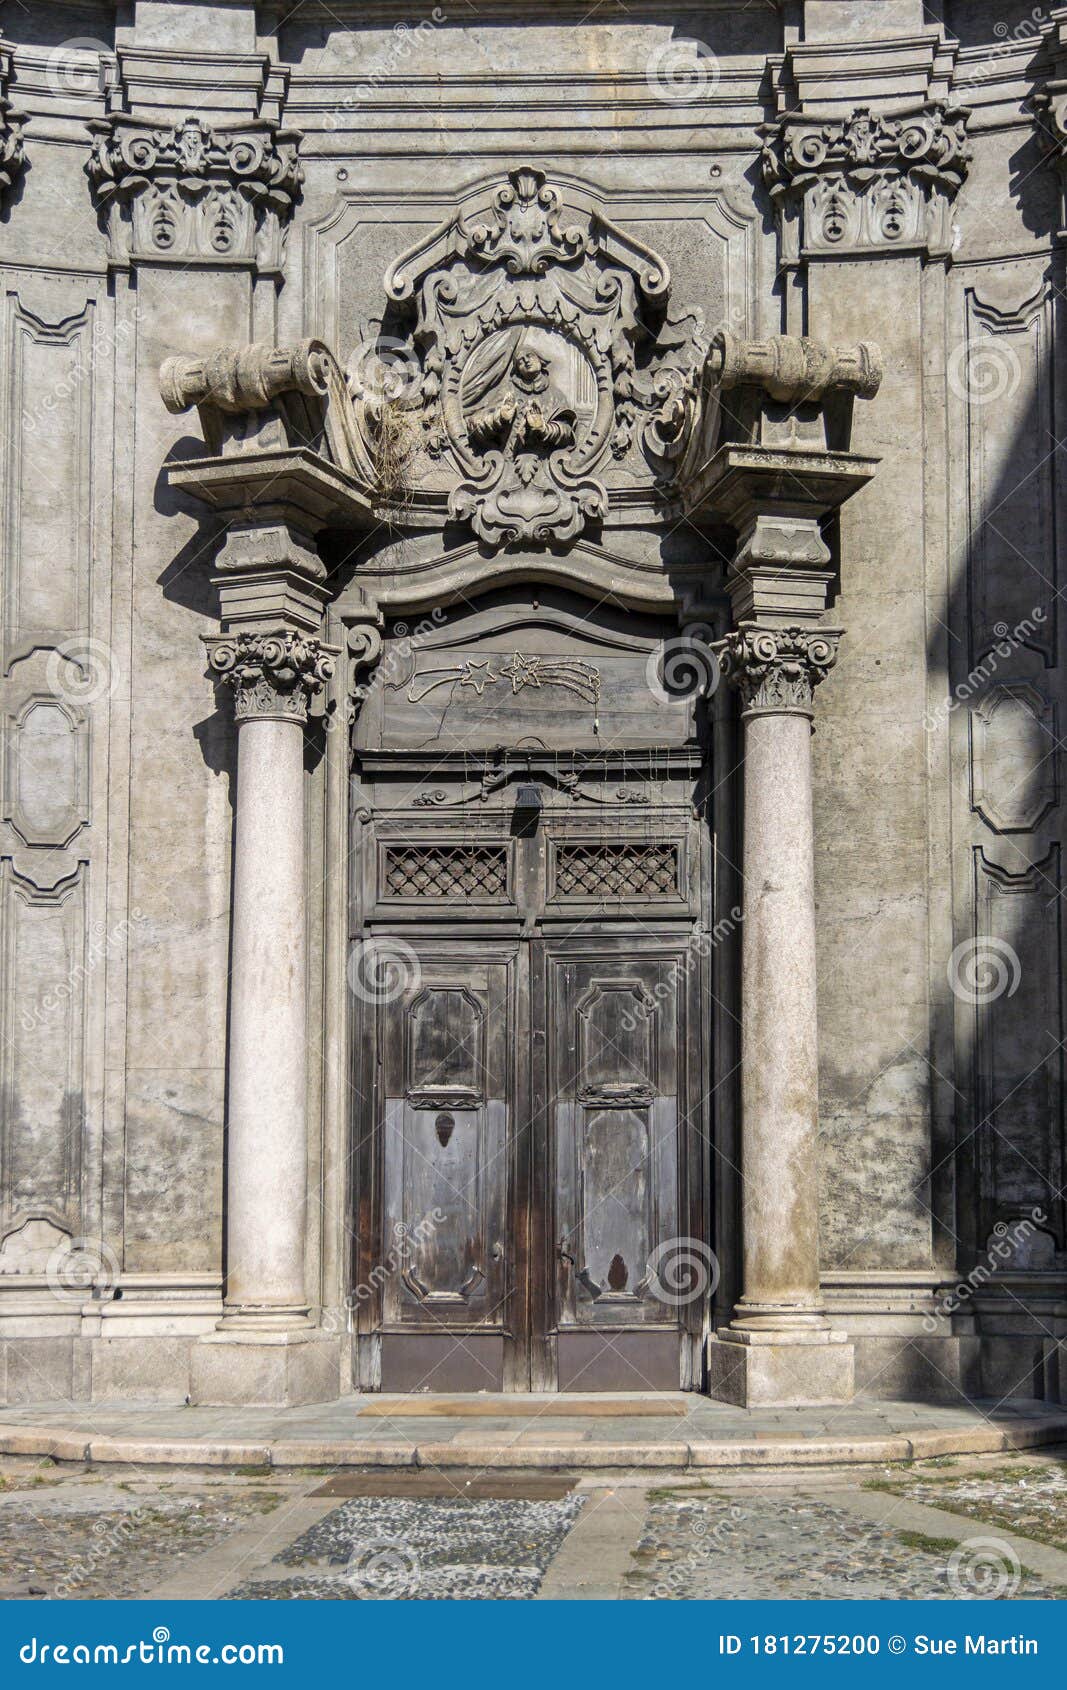 ornate church entrance, milan, italy